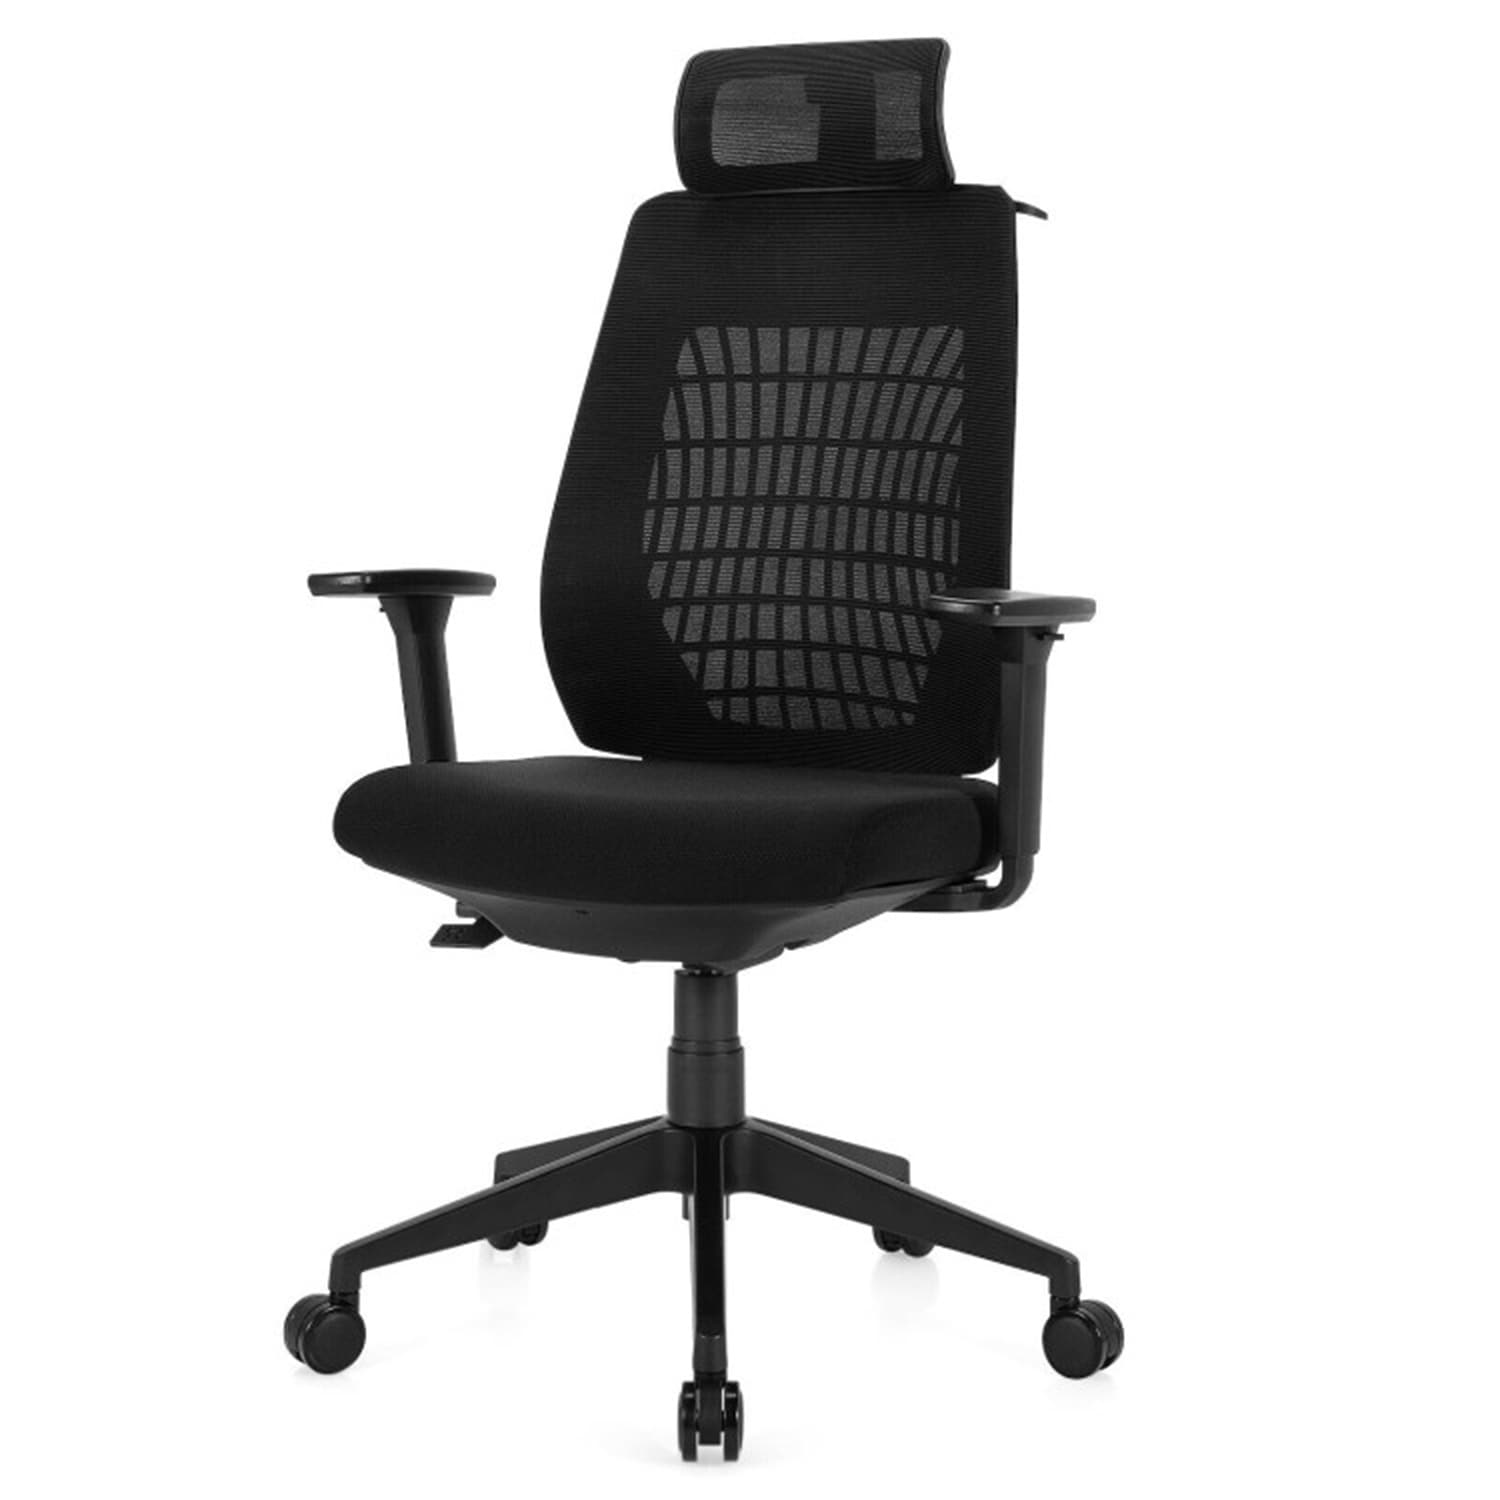 Simplie Fun BestOffice PC Gaming Chair Ergonomic 52 High Office Chair Desk Chair with Lumbar Support Flip Up Arms Headrest PU | Mathis Home